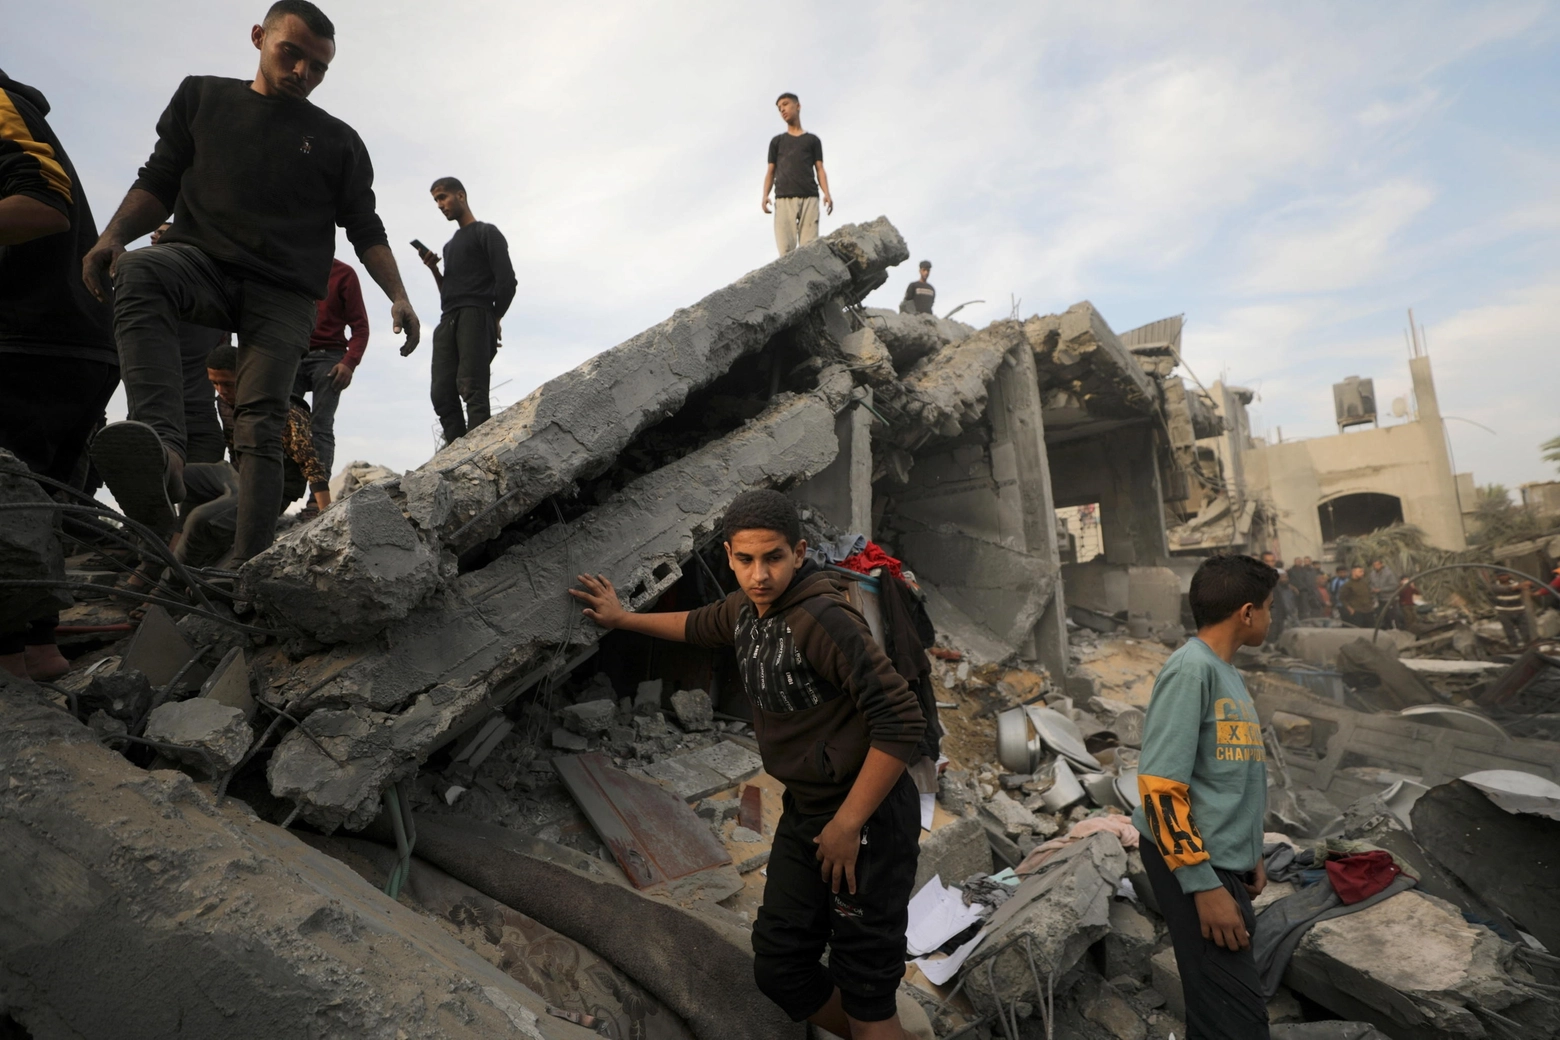 Gaza, palestinesi cercano vittime sotto le macerie dopo i raid israeliani (Epa)